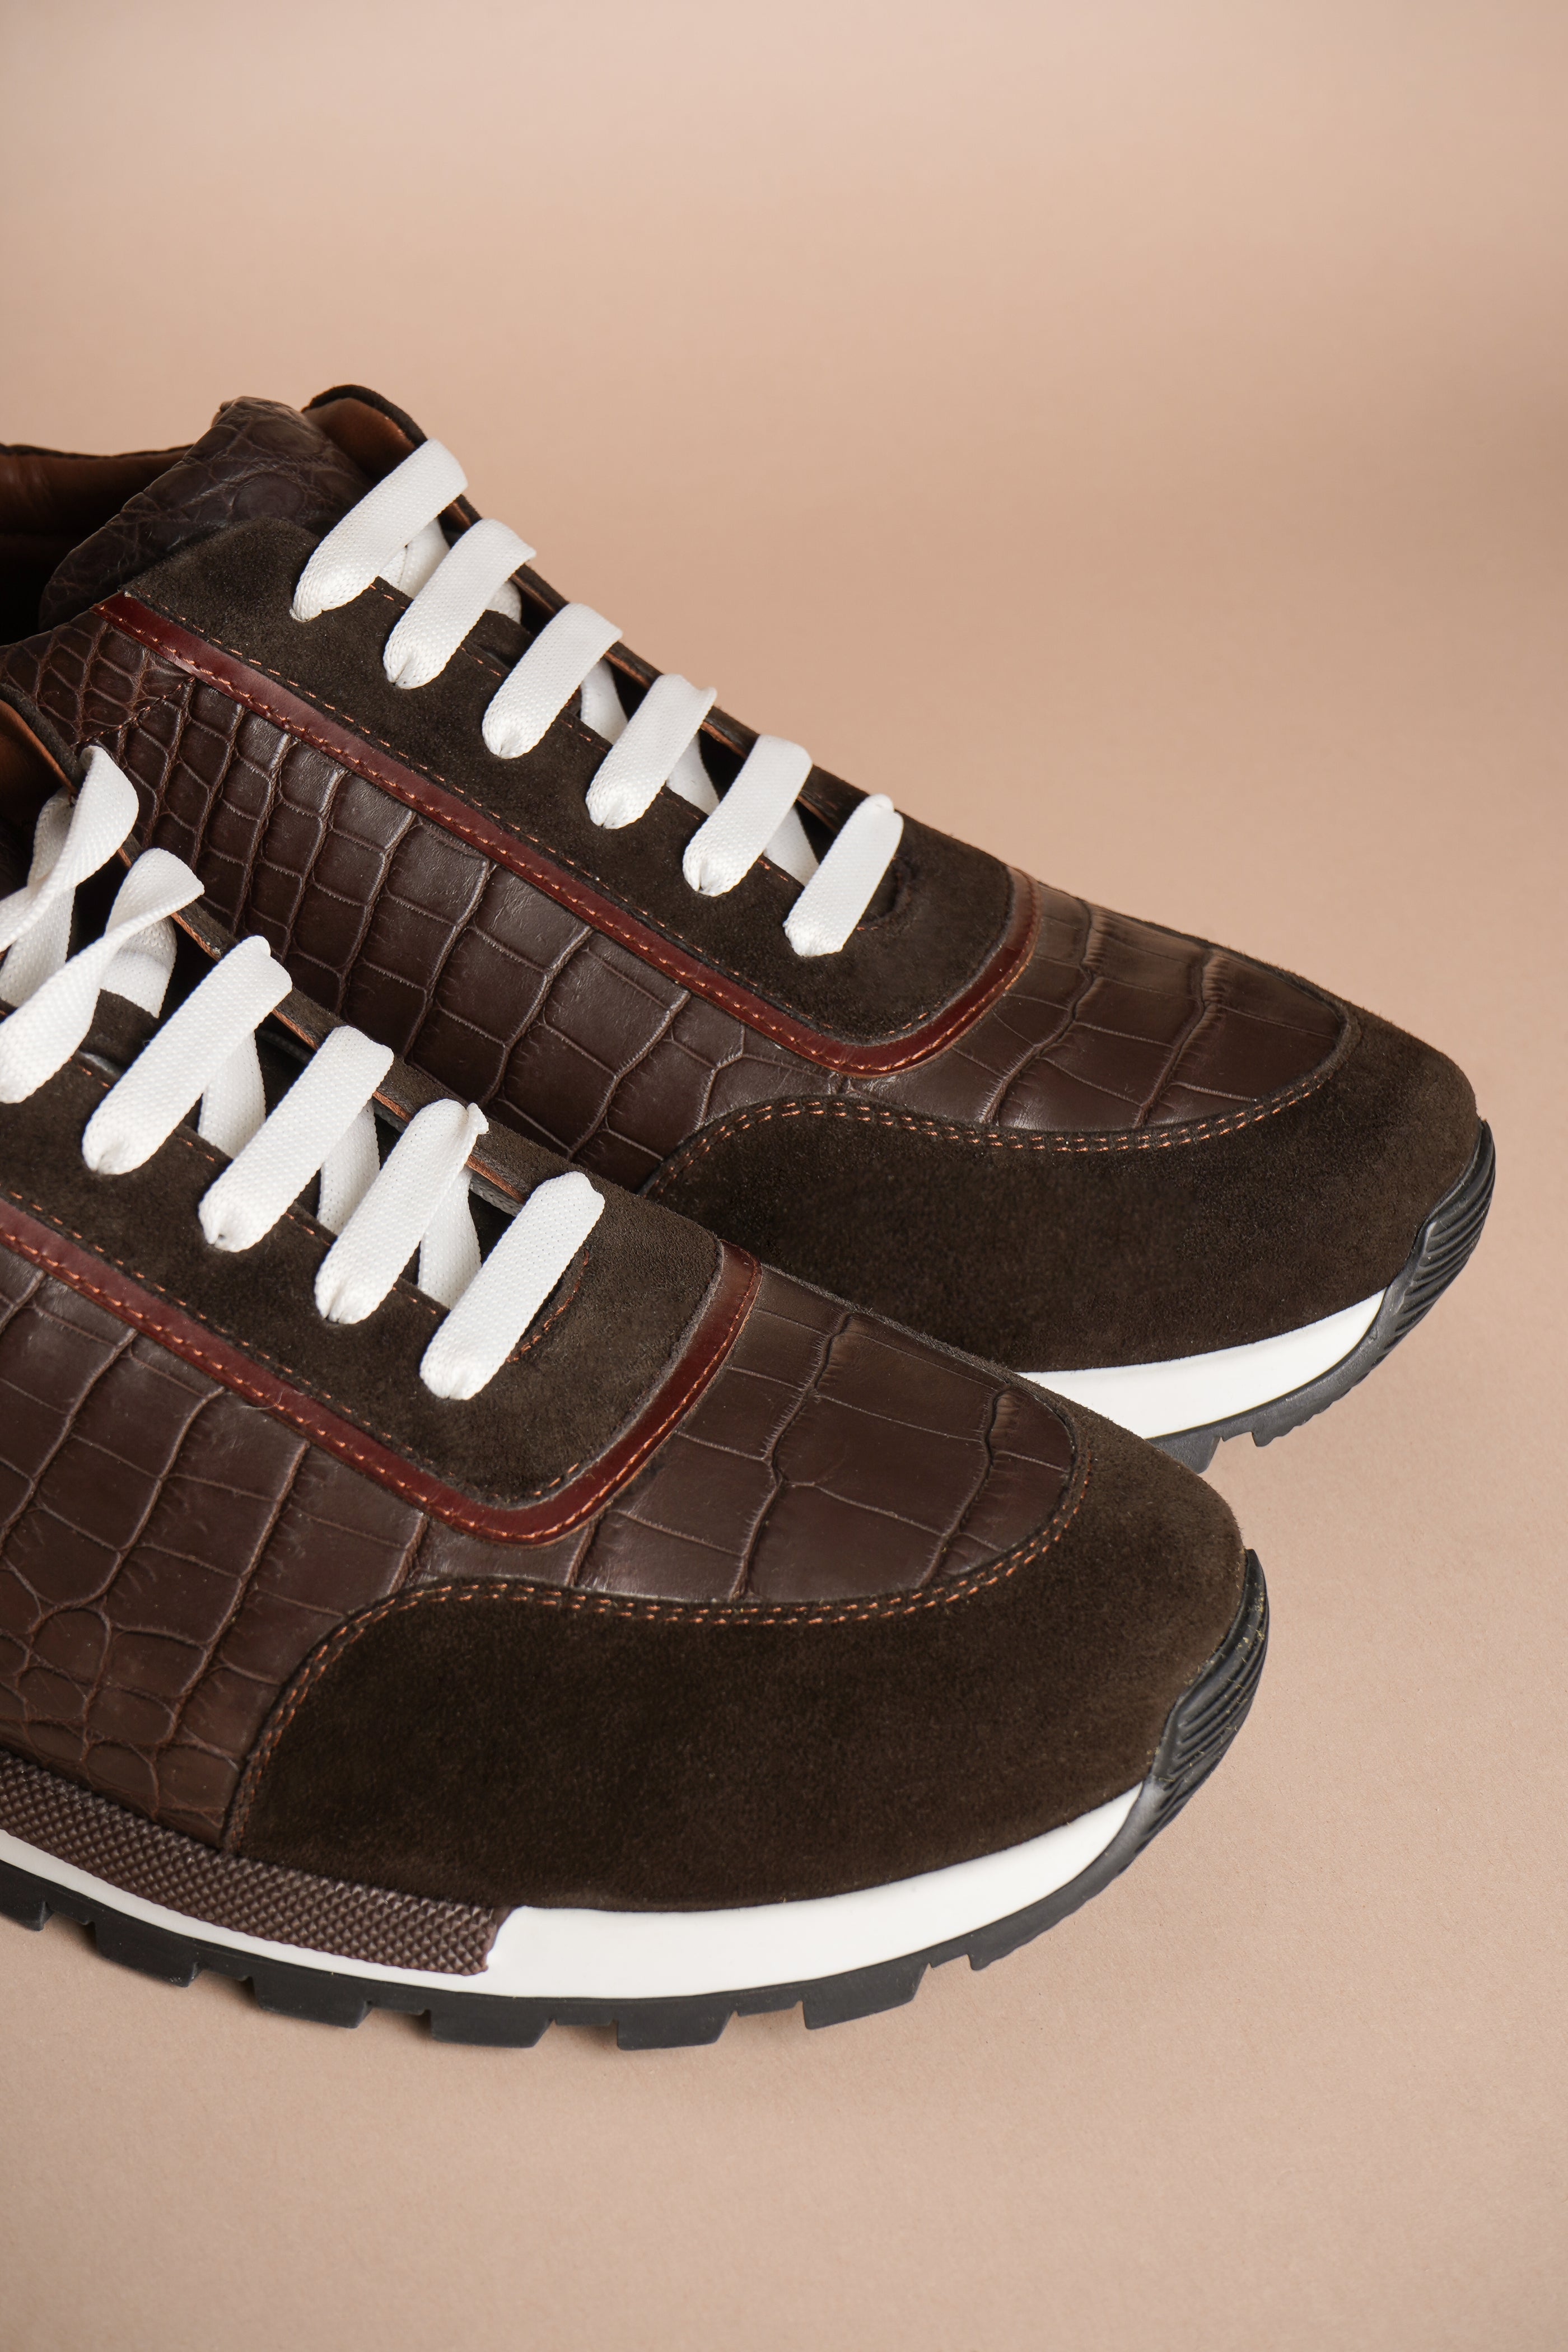 Balmoral Croc-Suede Sneakers